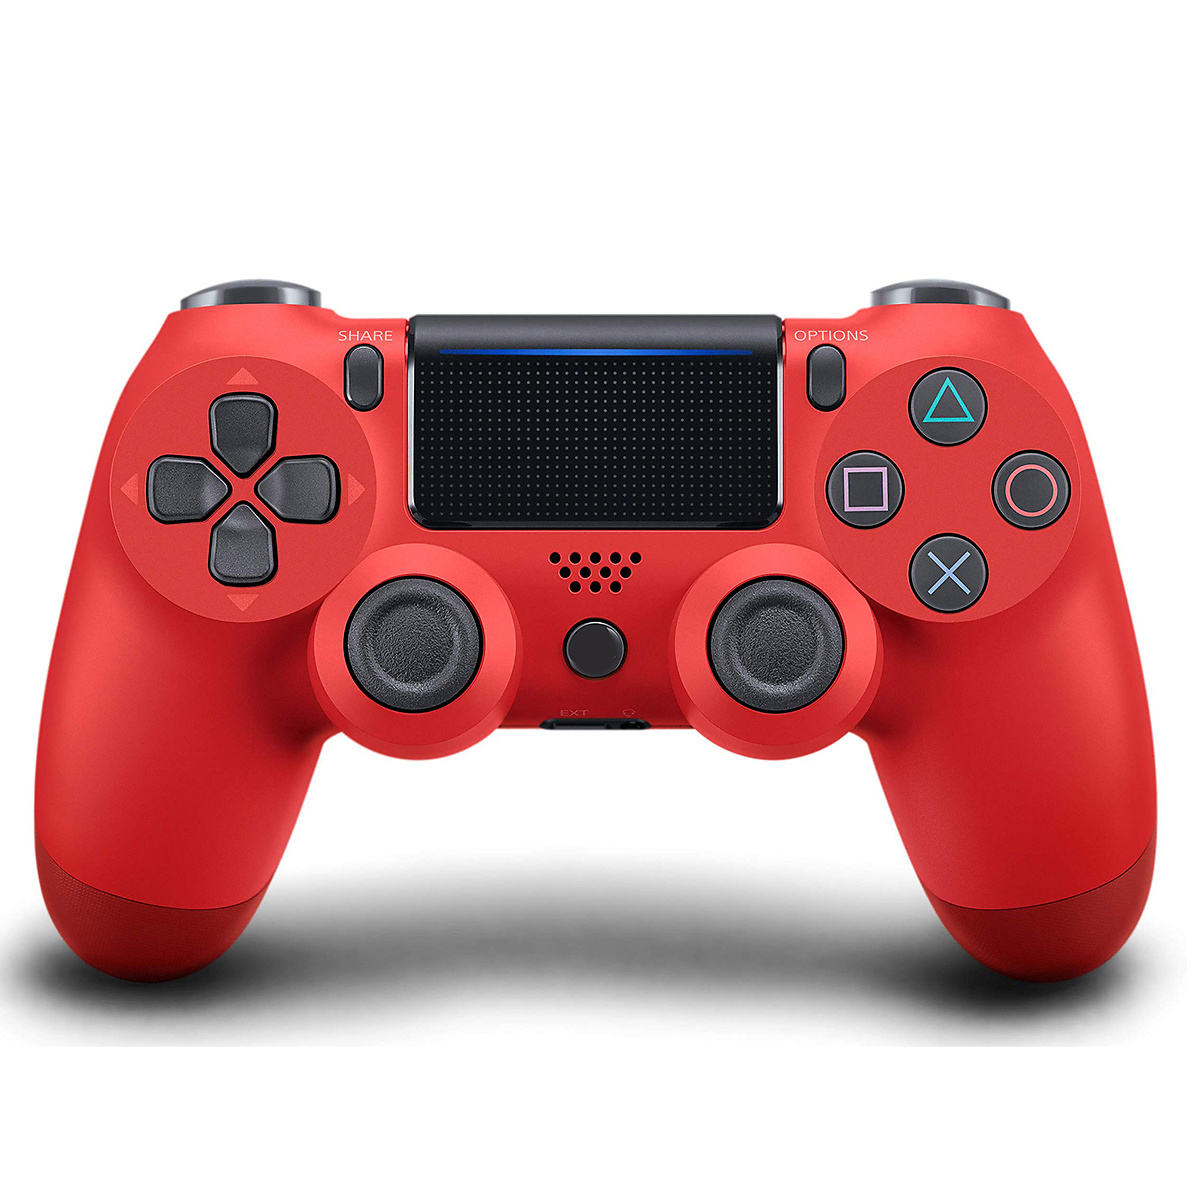 PS4 trådlös handkontroll, röd